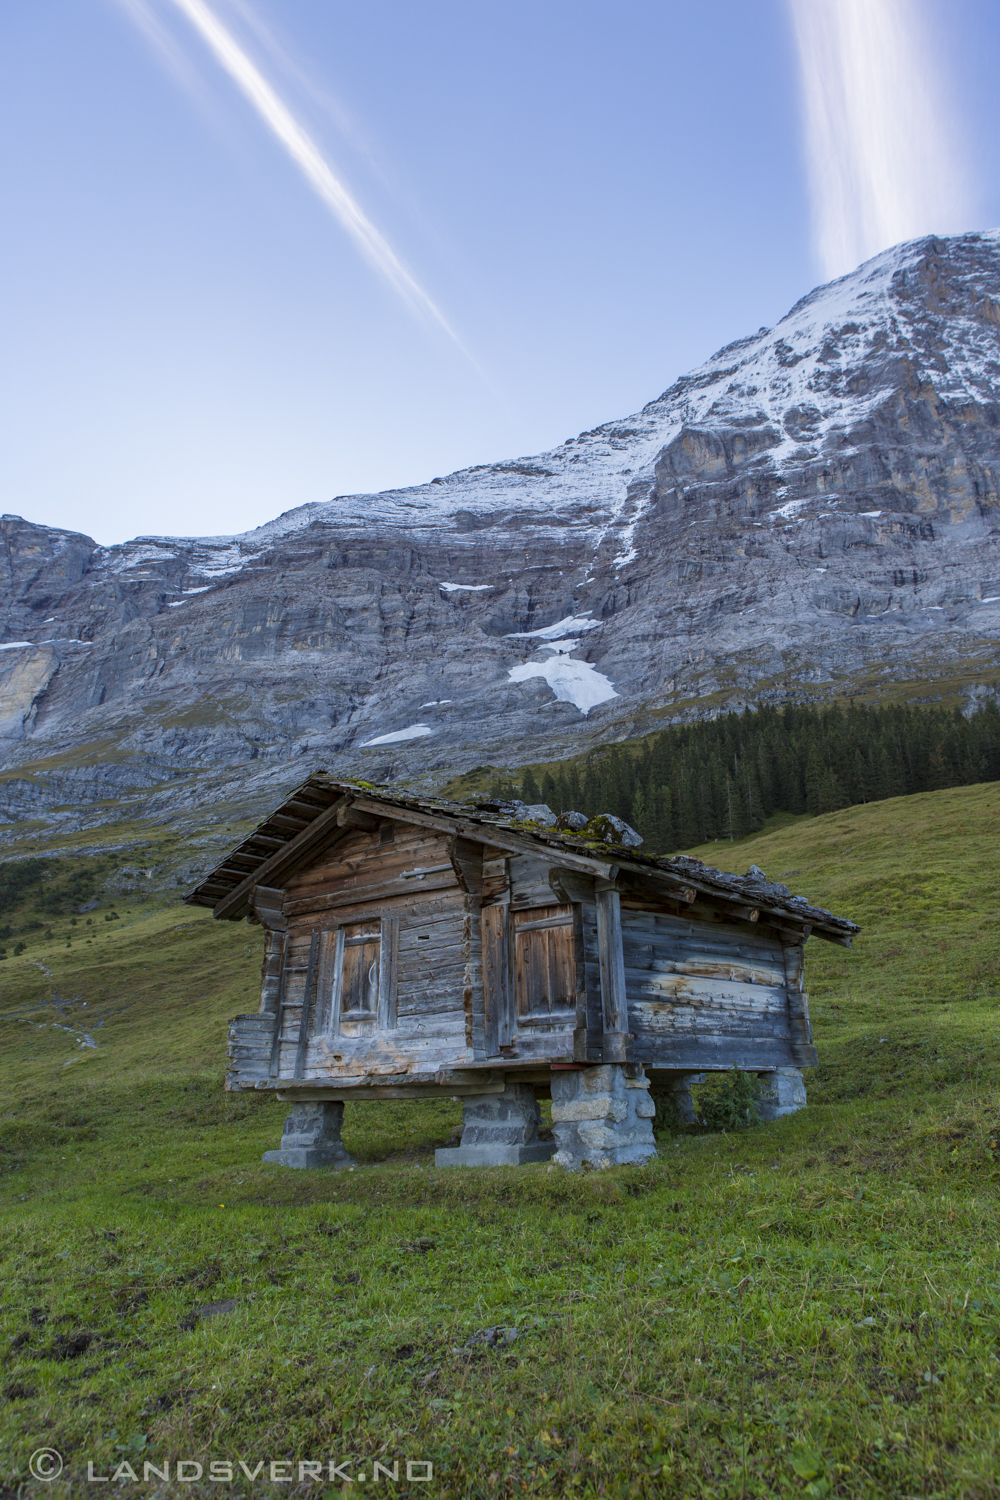 Alpiglen, Switzerland. 

(Canon EOS 5D Mark III / Canon EF 24-70mm f/2.8 L USM)